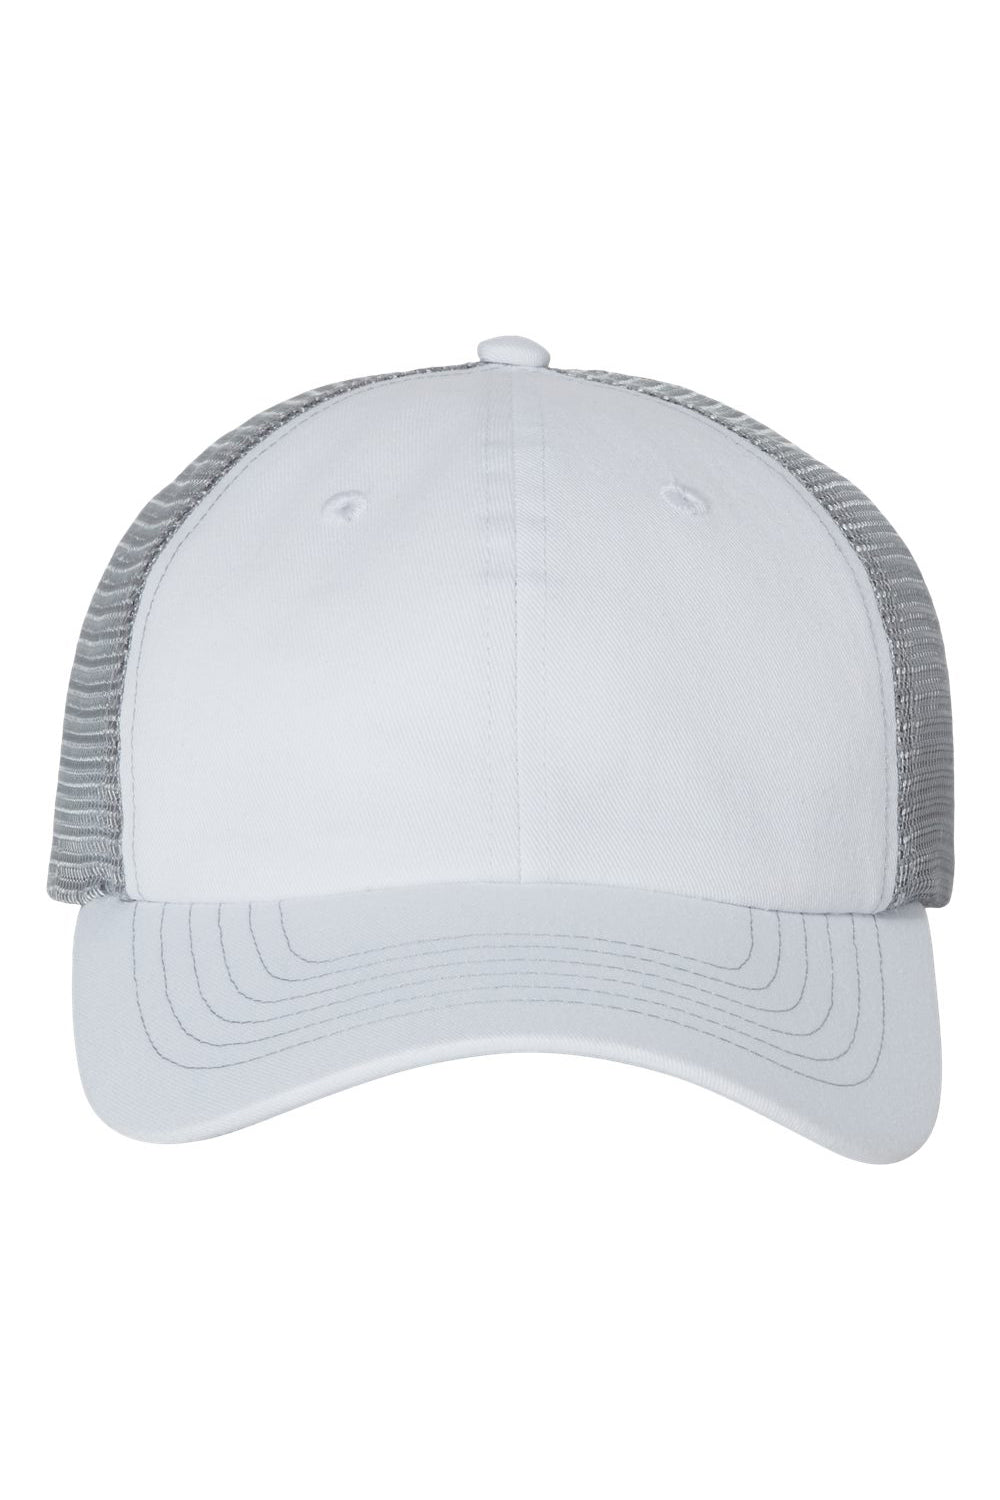 Sportsman 3100 Mens Contrast Stitch Mesh Back Hat White/Grey Flat Front